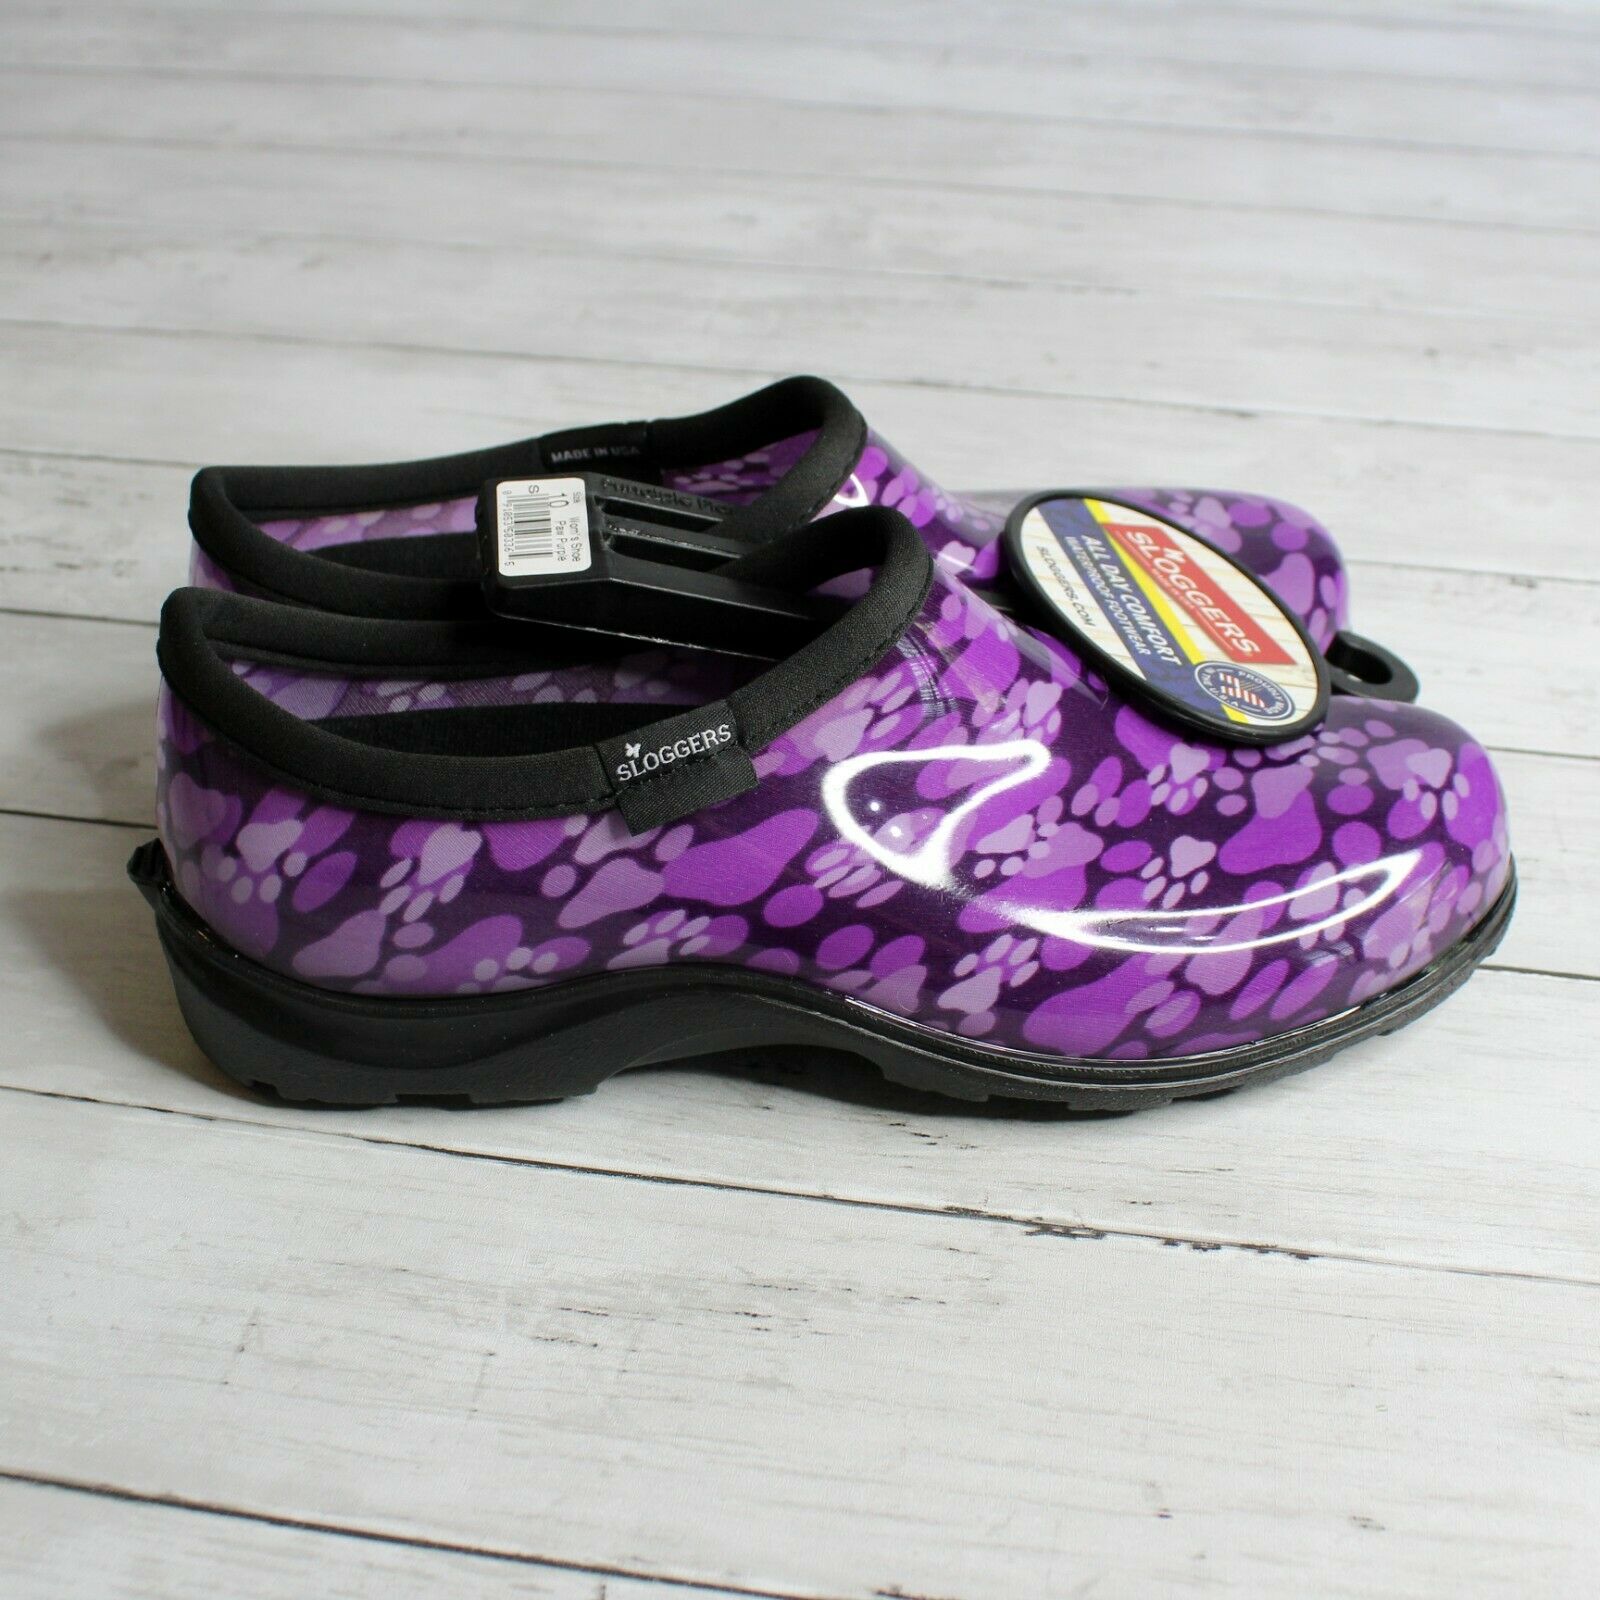 Sloggers Woman's Rain Garden Shoe Boots Size 10 Purple Paw Prints